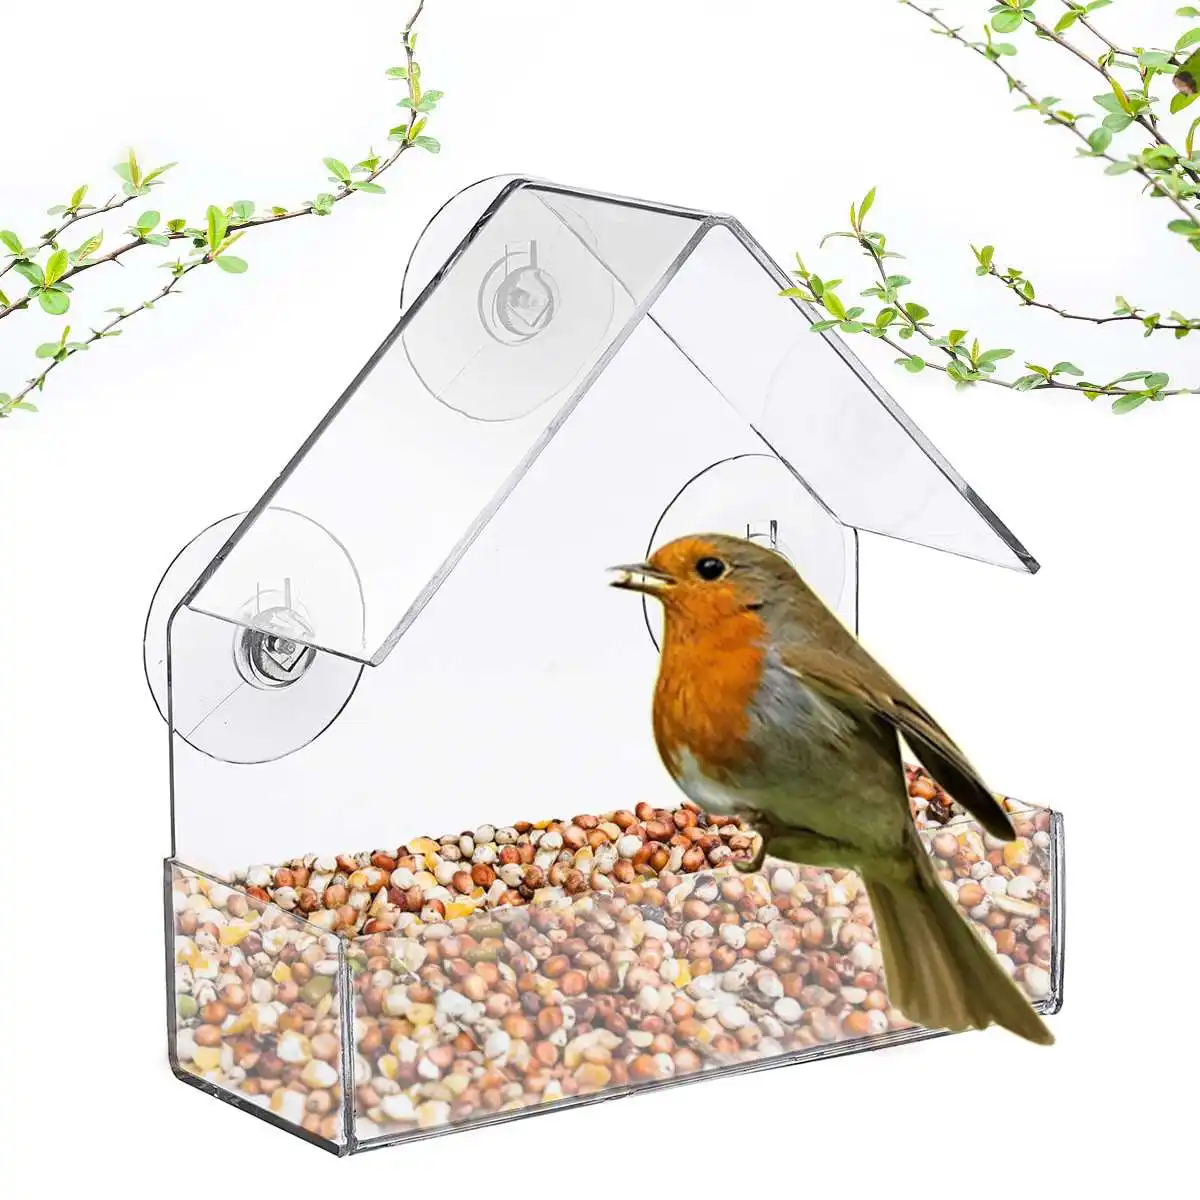 Transparent Acrylic Bird Feeder Durable Window Viewing Bird Feeders Tray Birdhouse Suction Cup Mount House Type Simple Feeder